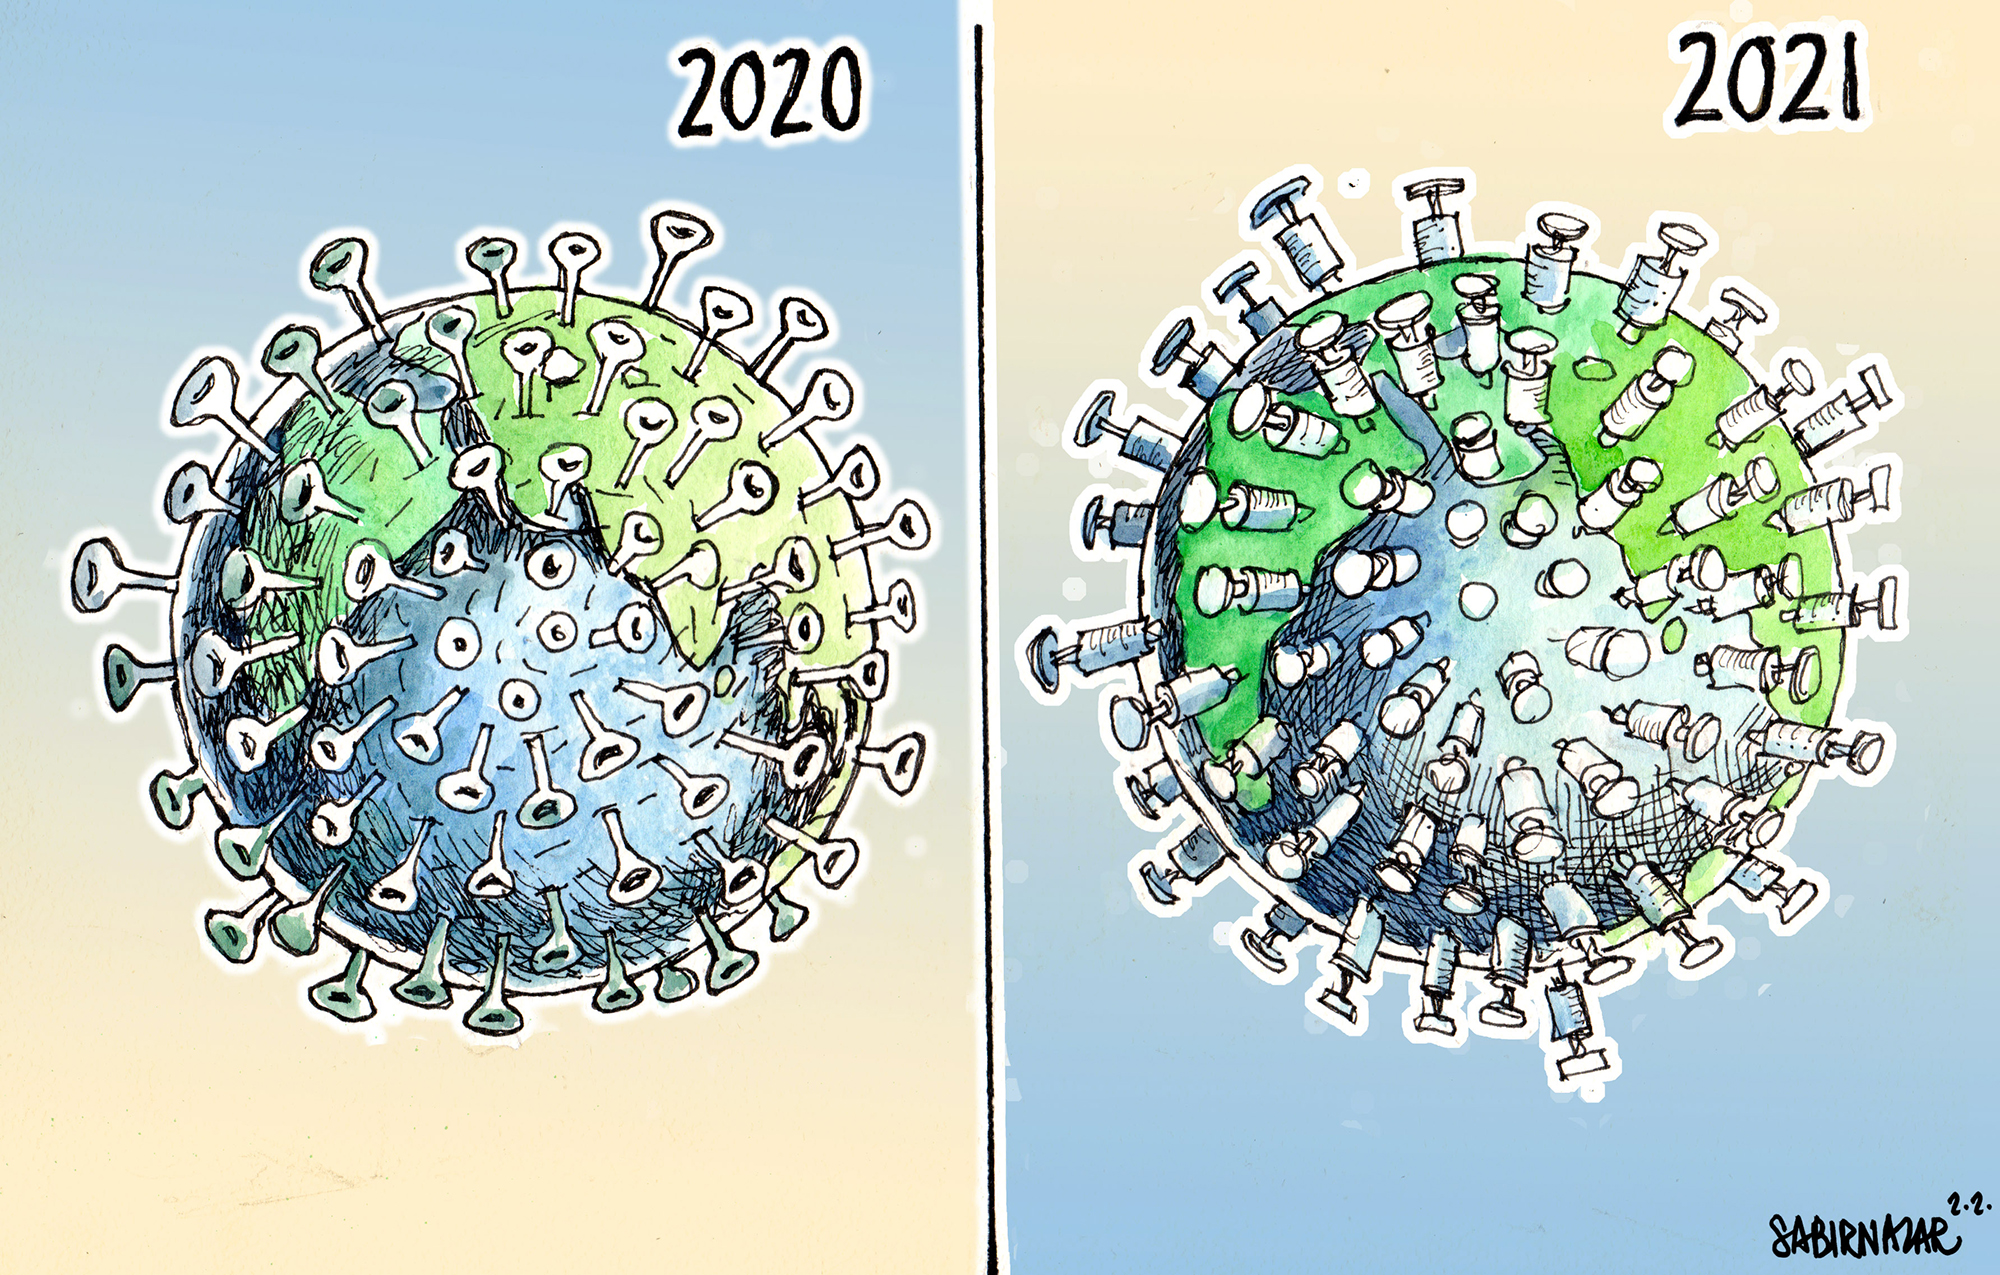 Corona Virus in 2021